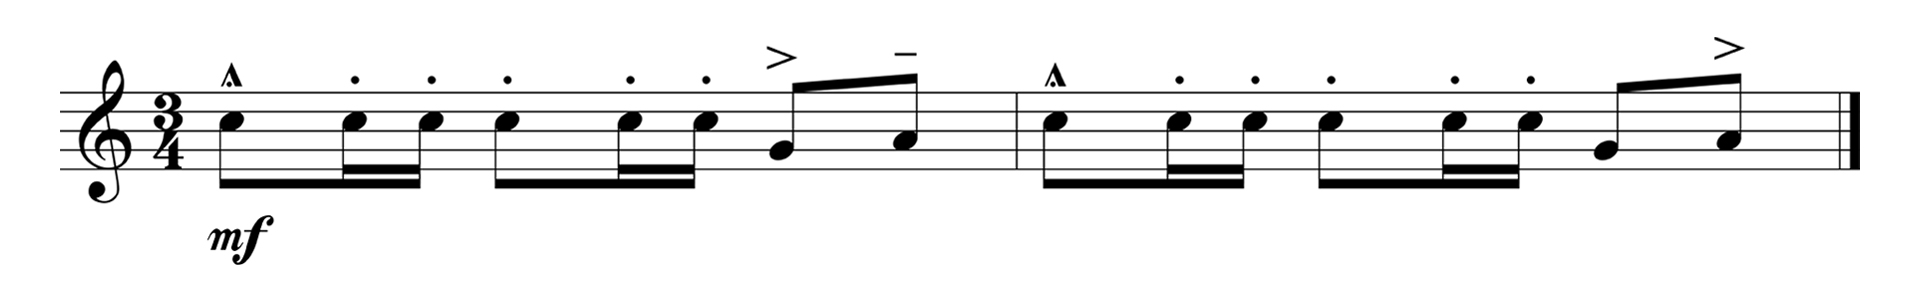 Music arrangement illustrating a linear melodic shape. 